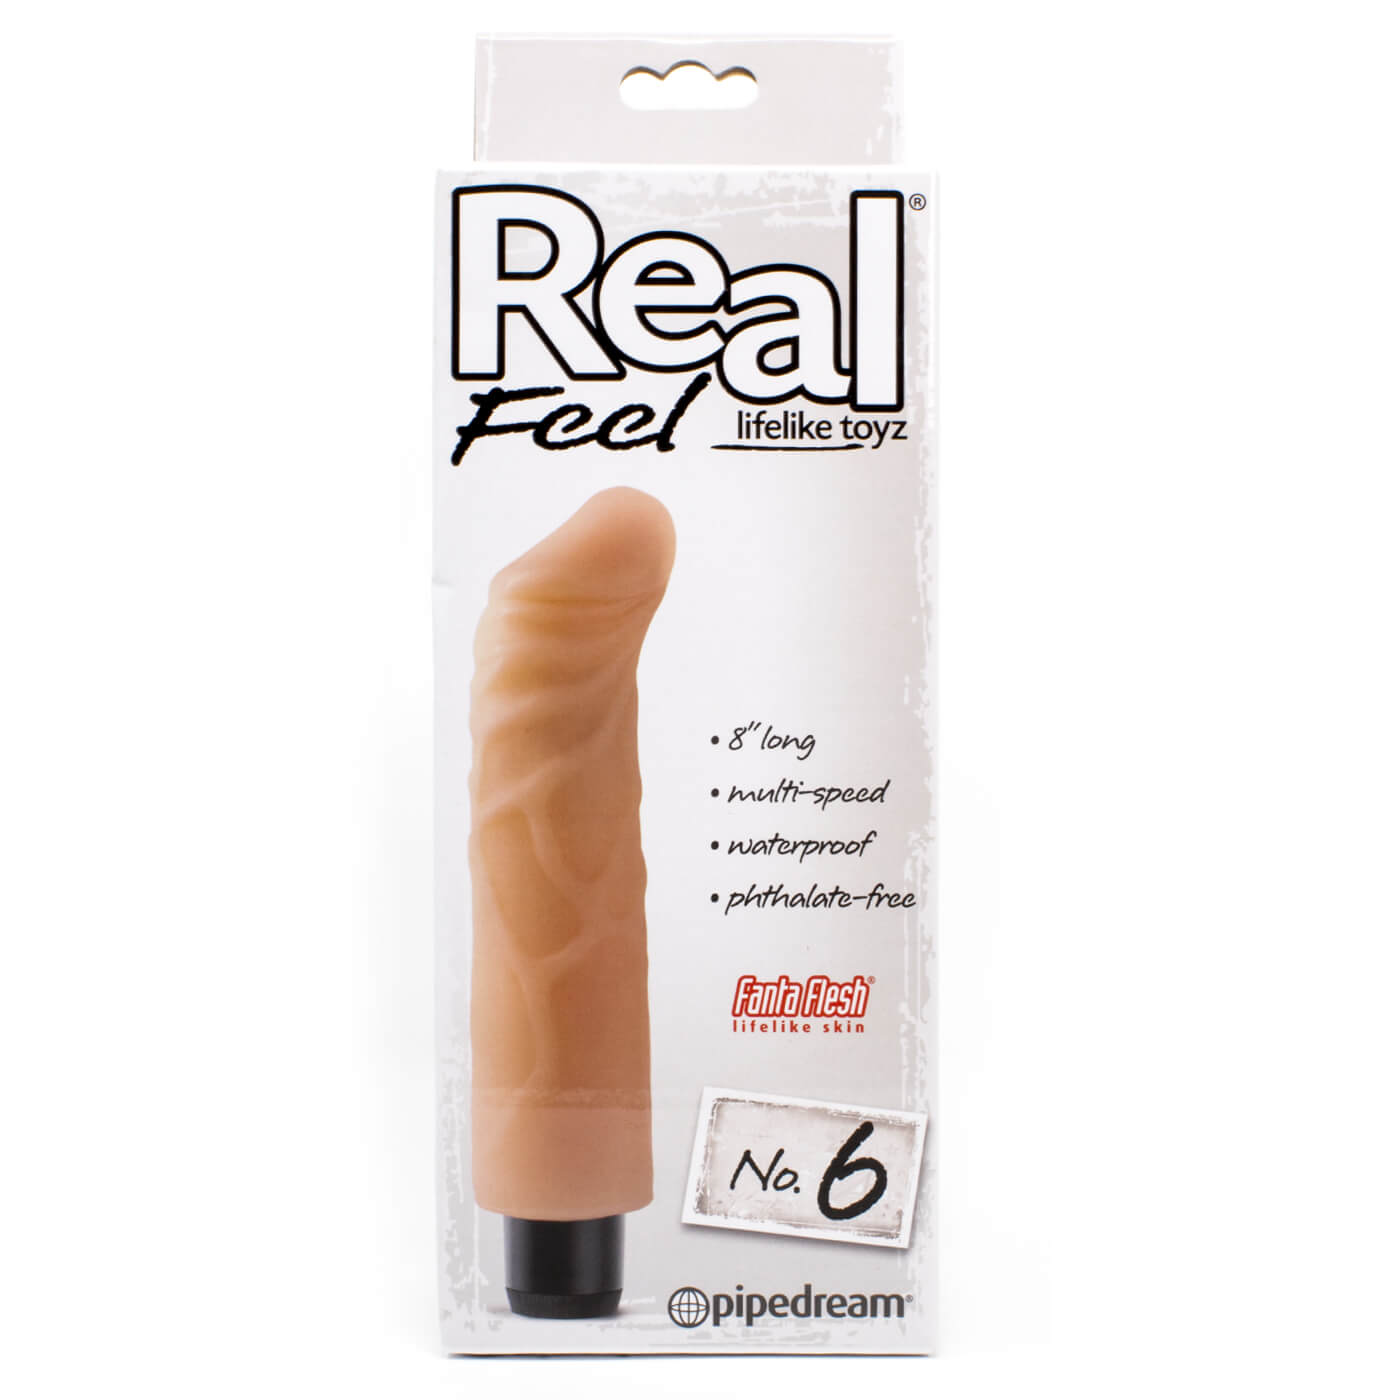 Real Feel No.6 Realstic 8 Inch G-Spot Dildo Vibrator